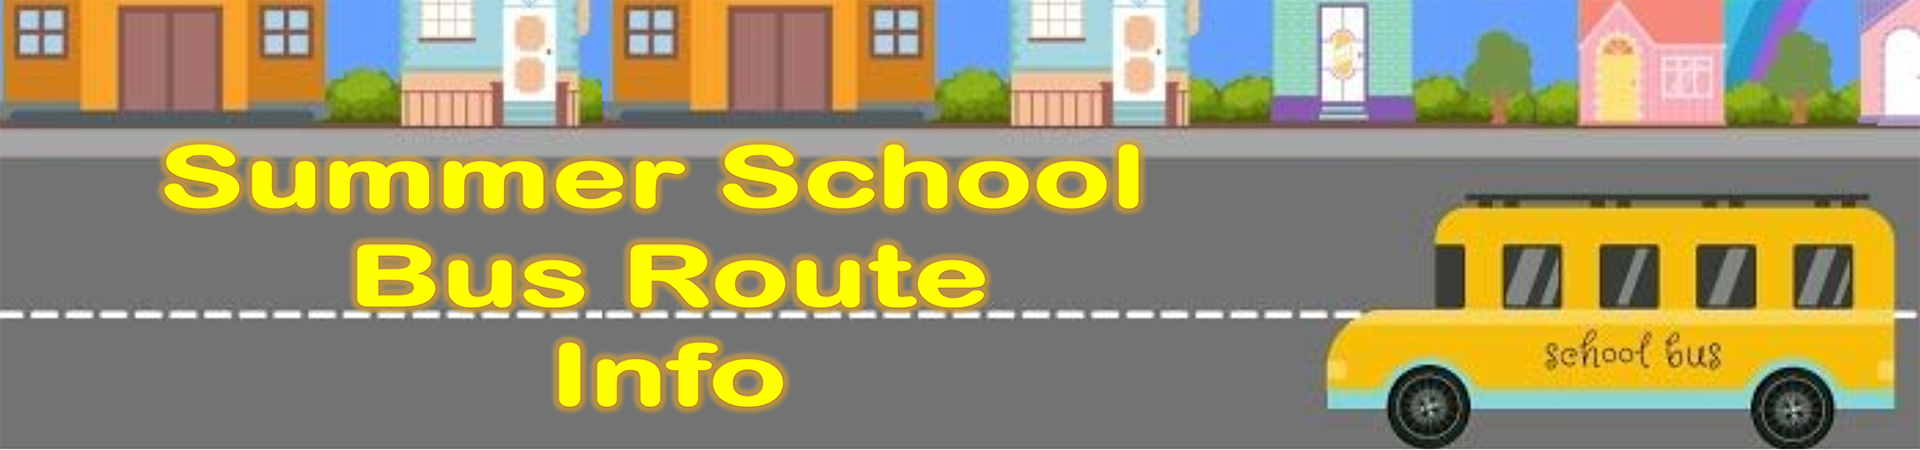 Summer school bus routes